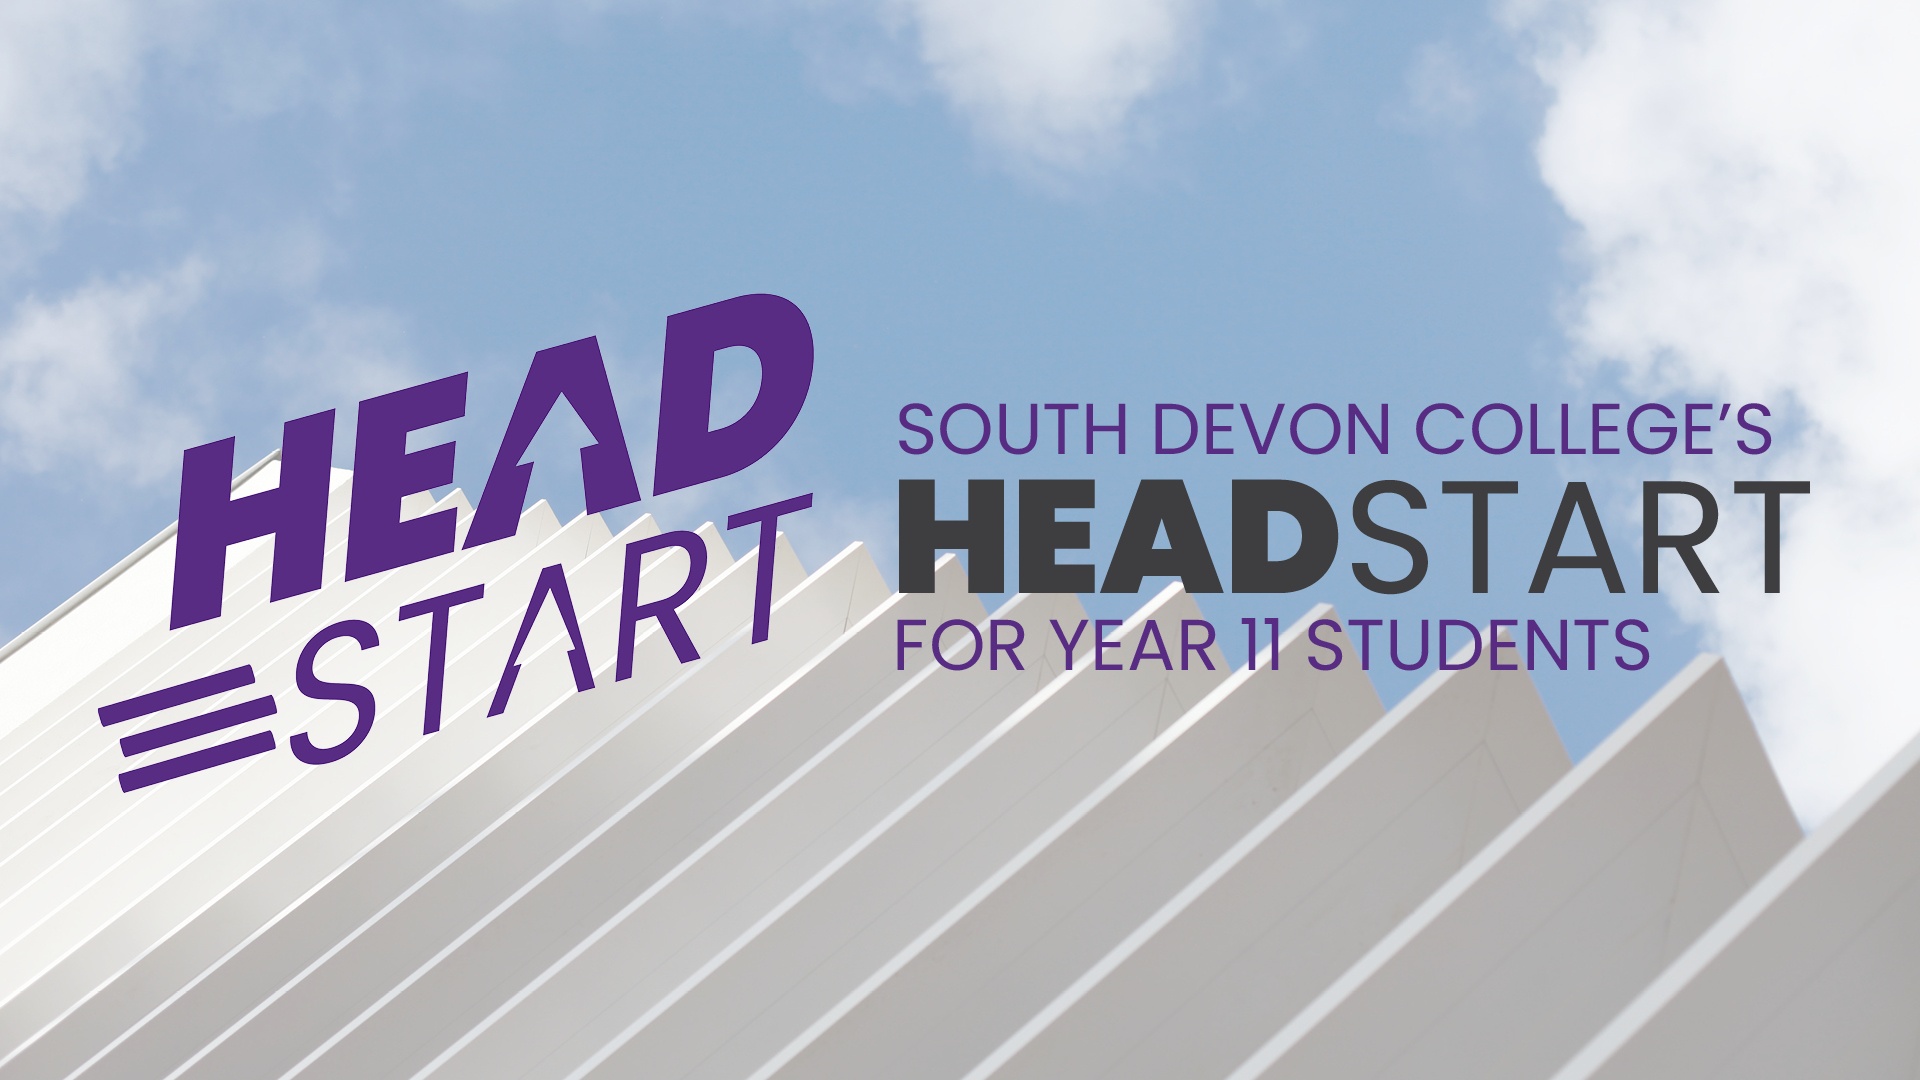 Head start programme for students leaving school